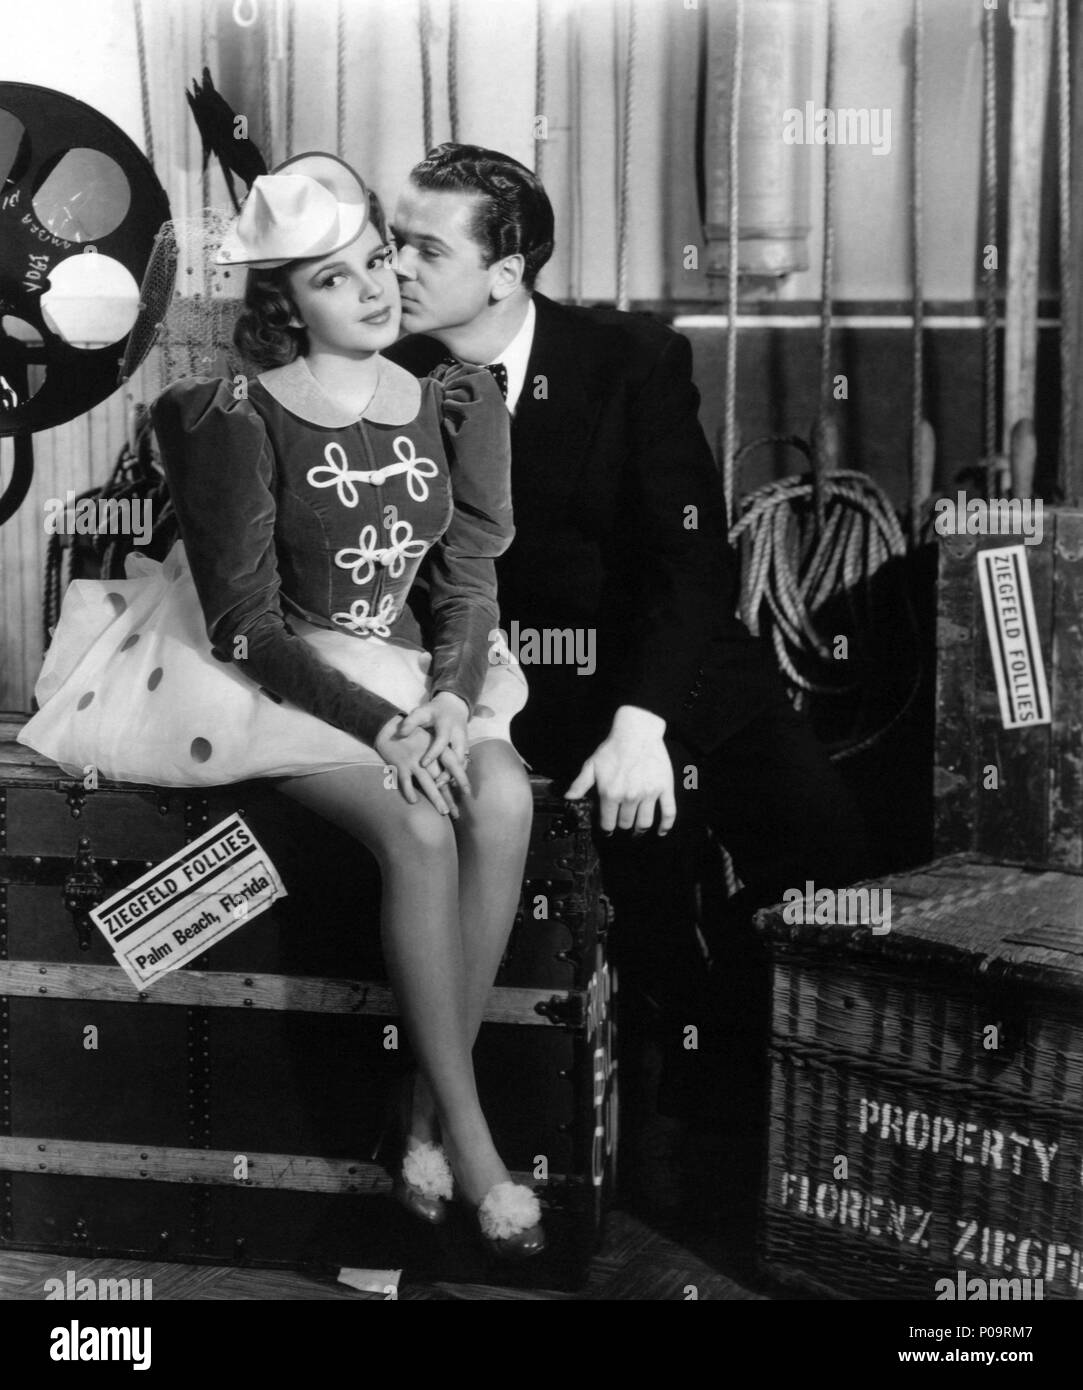 Original Film Title: ZIEGFELD GIRL.  English Title: ZIEGFELD GIRL.  Film Director: ROBERT Z. LEONARD.  Year: 1941.  Stars: JUDY GARLAND; JACKIE COOPER. Credit: M.G.M / Album Stock Photo